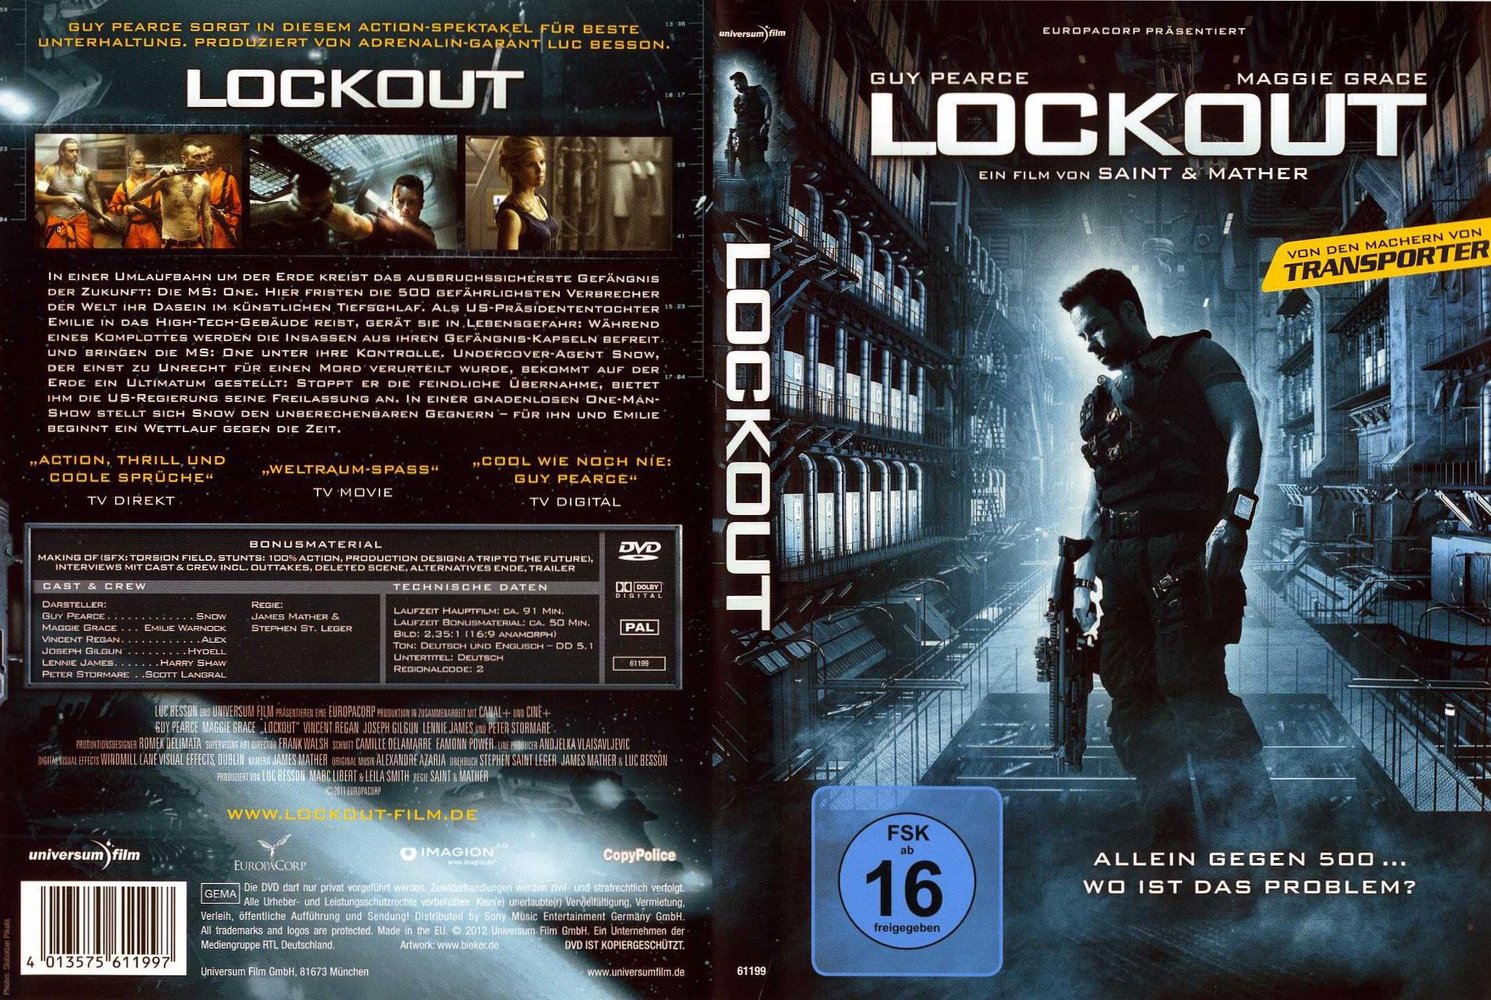 https://gfx.videobuster.de/archive/v/c0xkg0xvPvY4XZzSoywTW4Qcz0lMkawqCUyRjA5JTJGaW1hmSUyRmpwZWclMkZhusFmNmL8wTVmqtQyZGZiNWbJYjdjNGQ0LmpwZyZyPWimMDA/lockout-dvd-full-cover.jpg